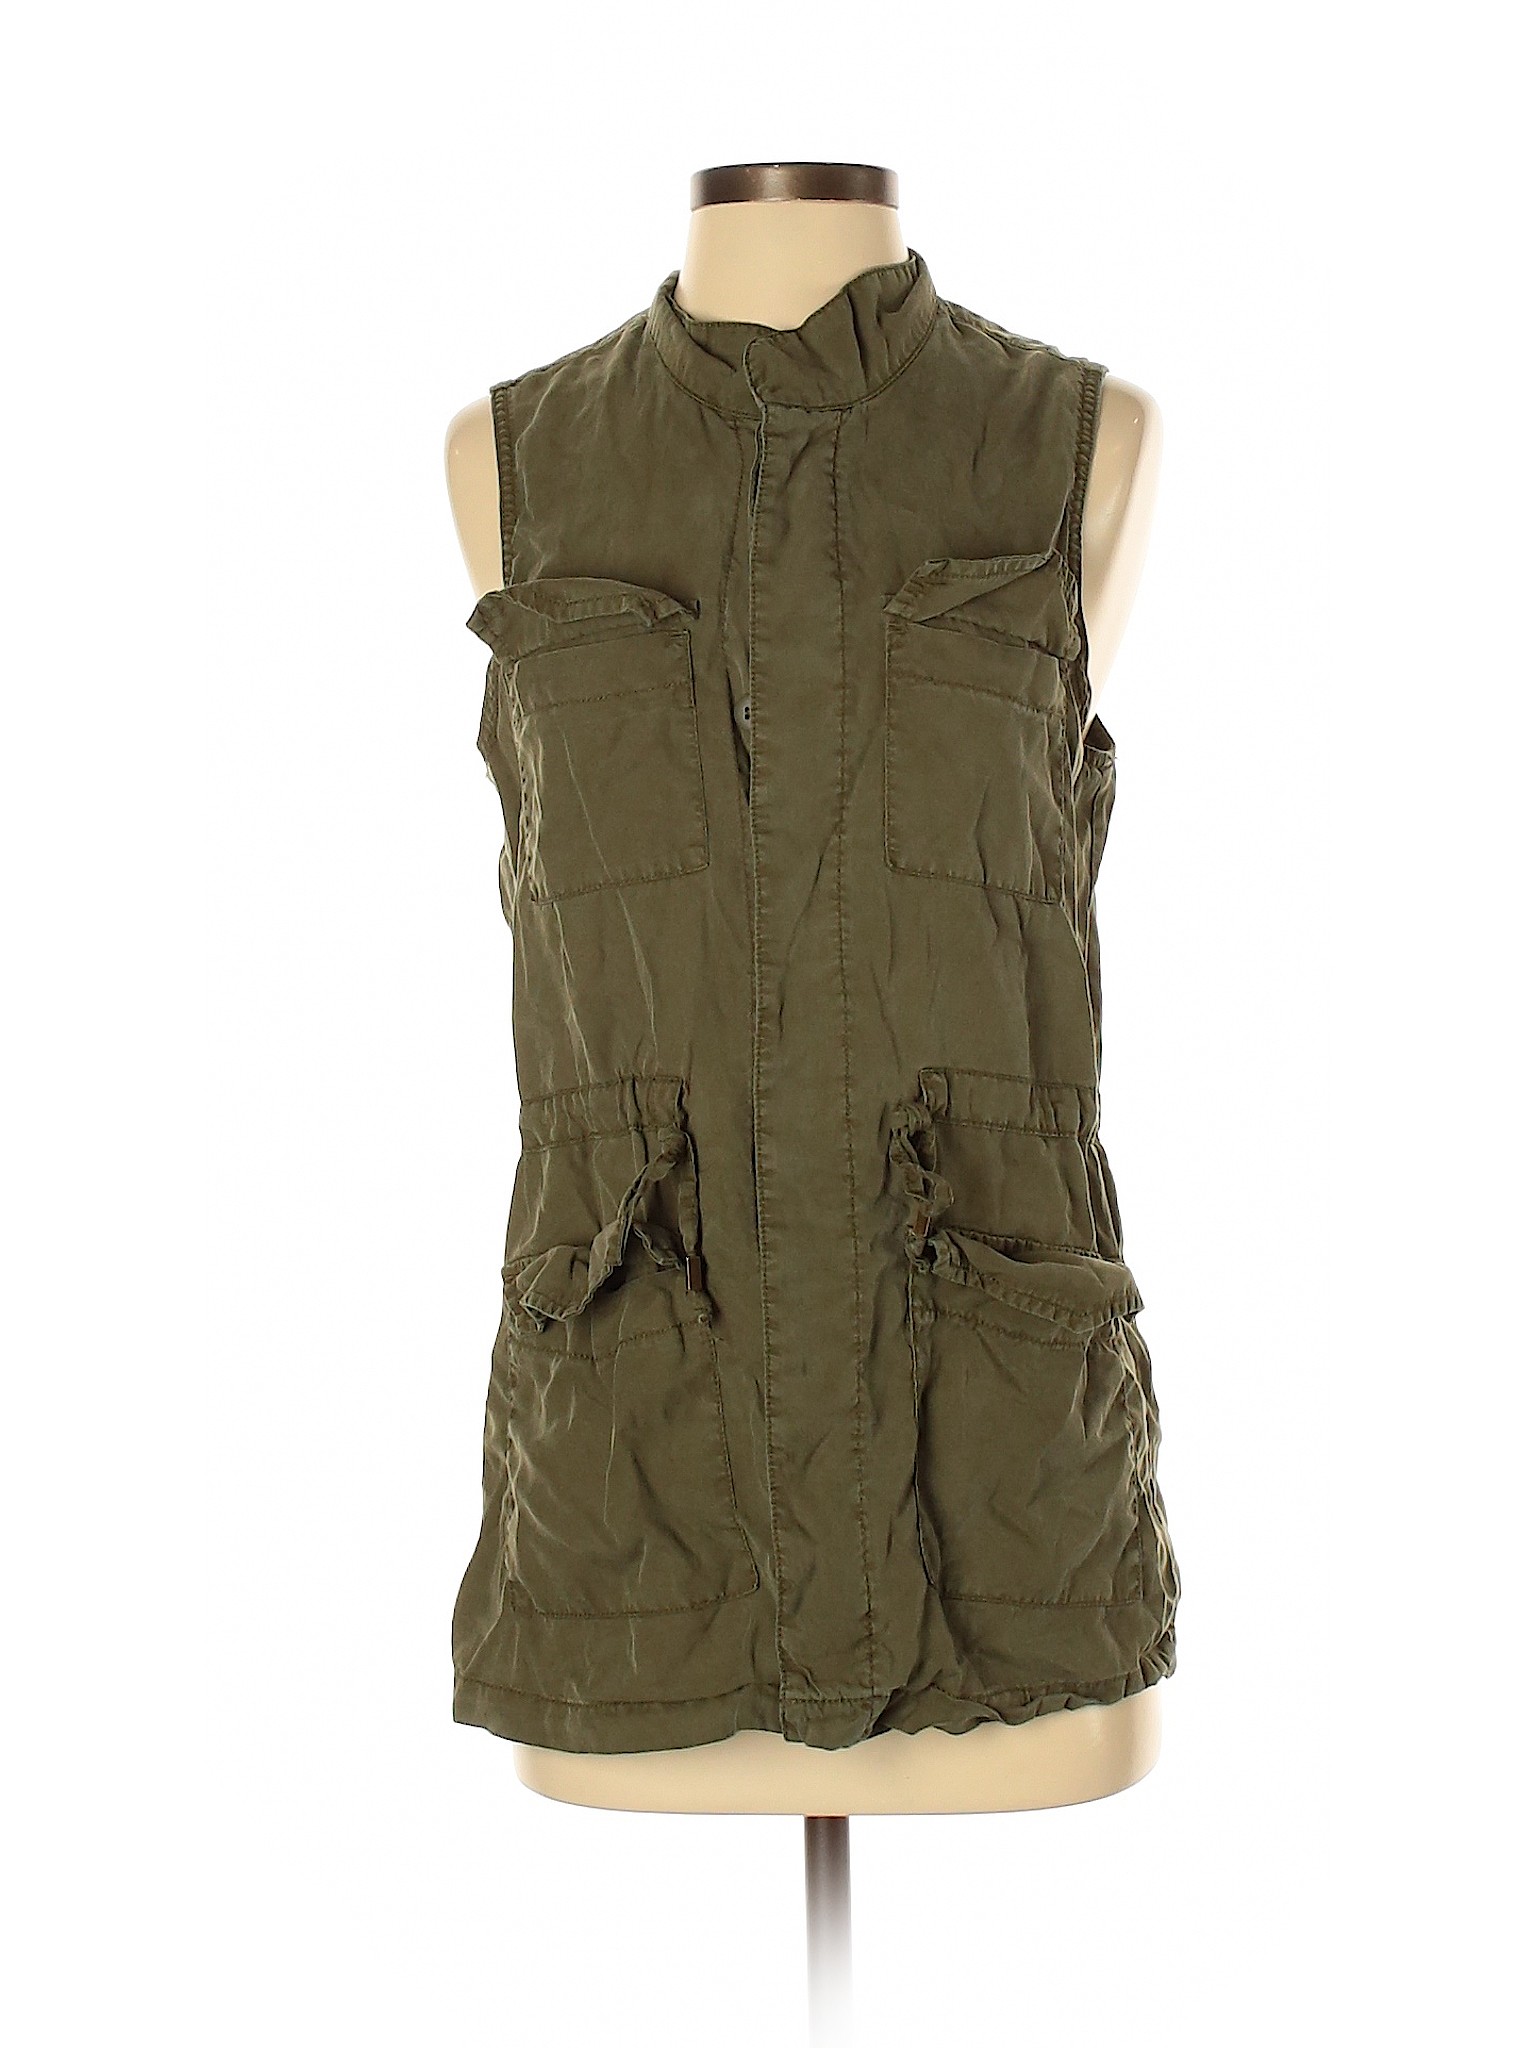 Universal Thread Women Green Jacket S | eBay